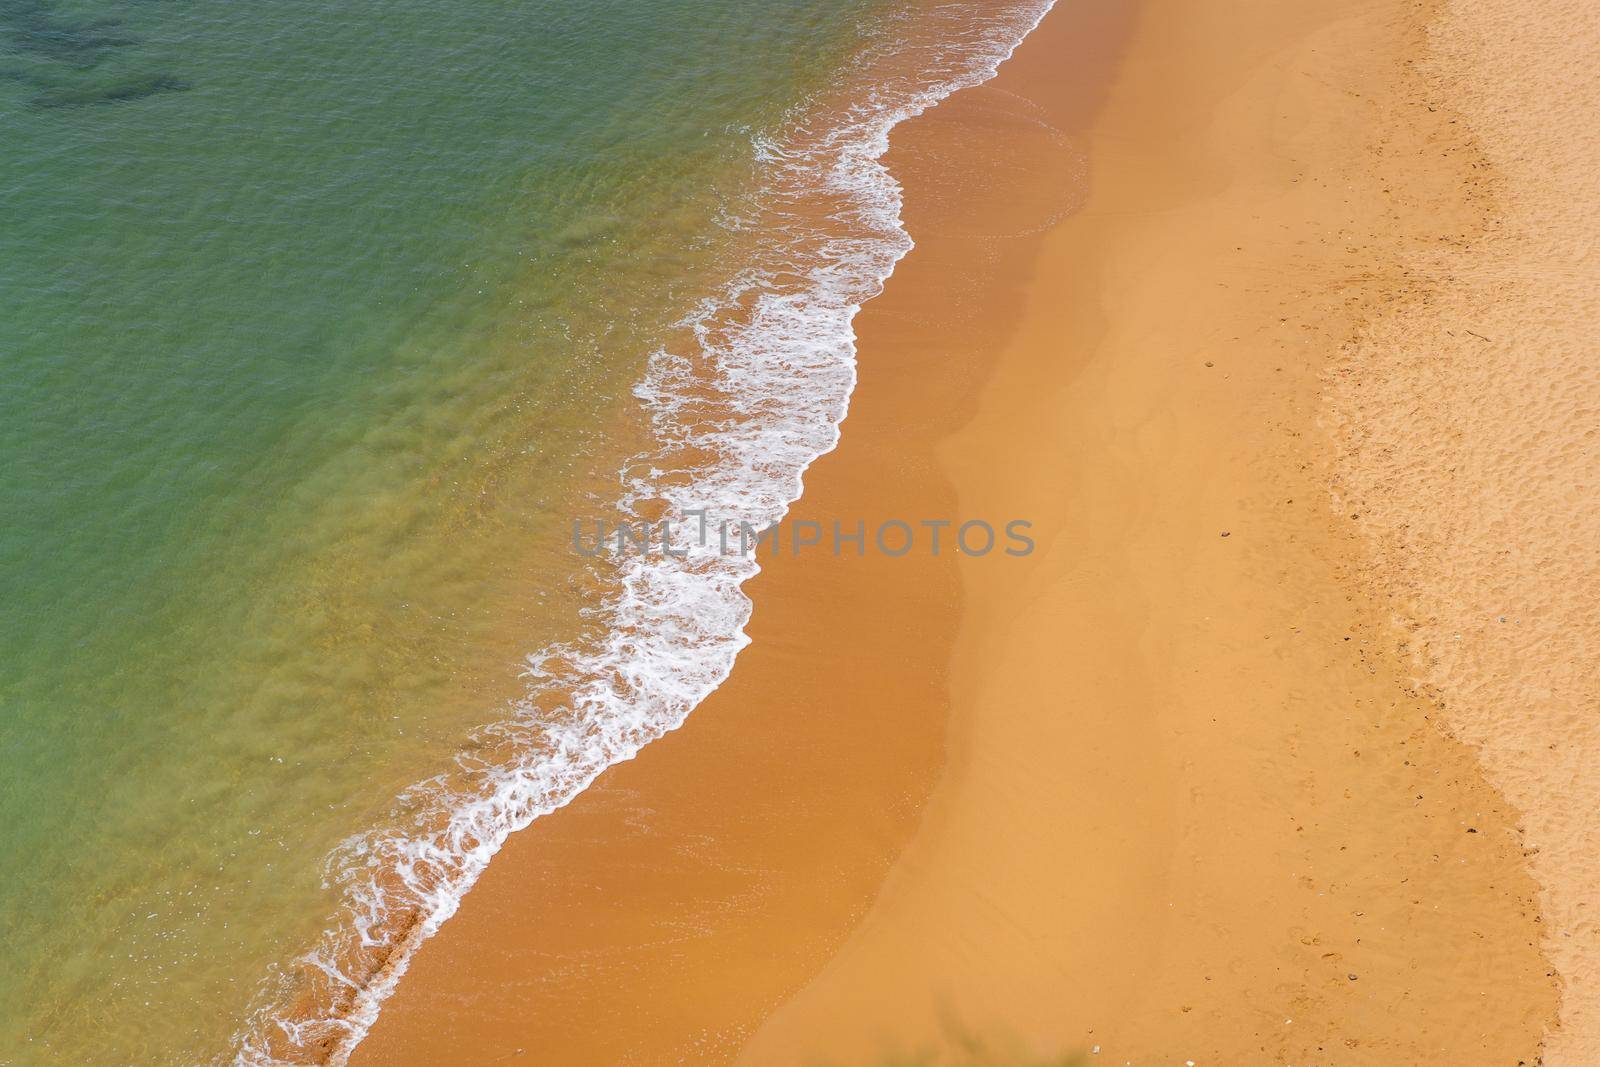 Aerial view of sea waves and sandy beach Atlantic ocean seashore